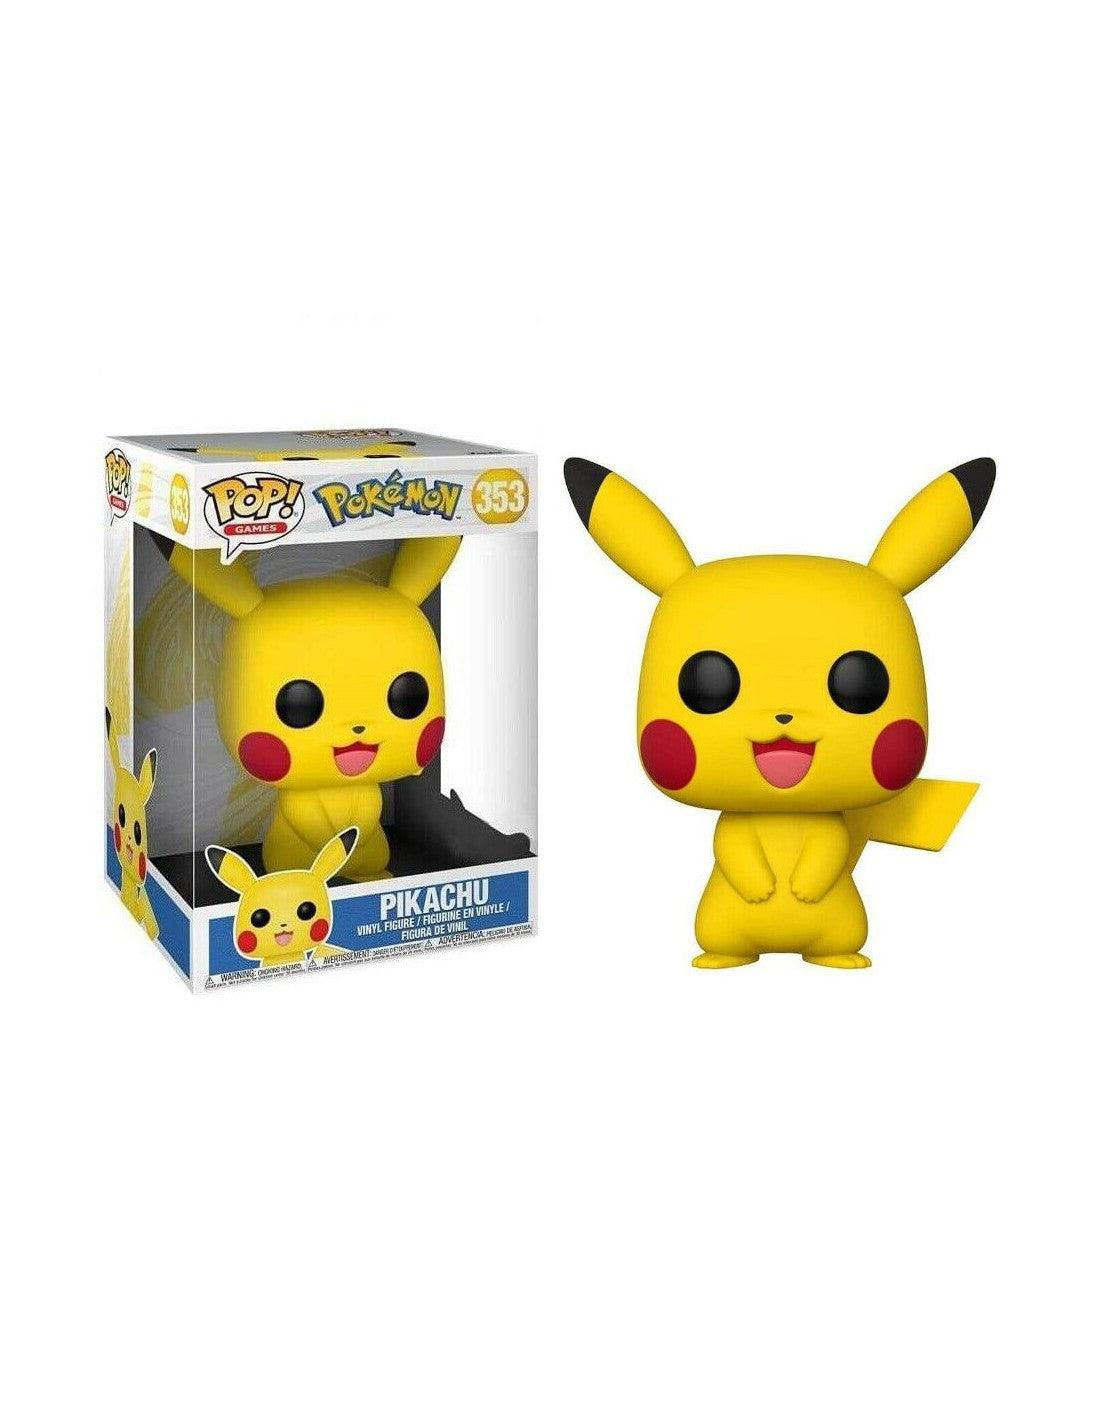 Pokèmon: Funko Pop! Games - Pikachu #353 - Magic Dreams Store